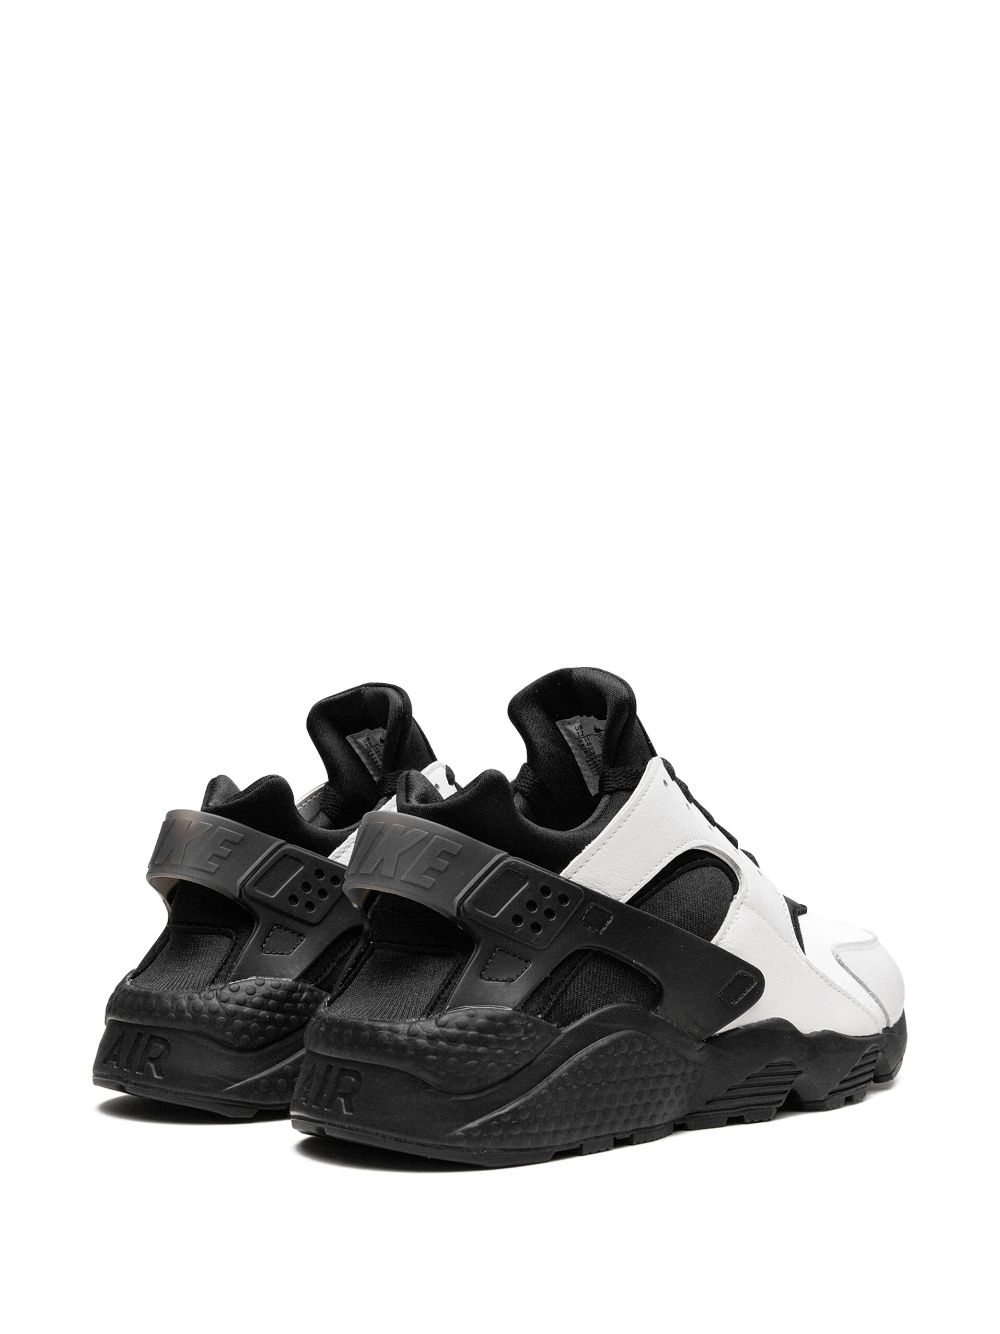 Air Huarache "White/Black" sneakers - 3